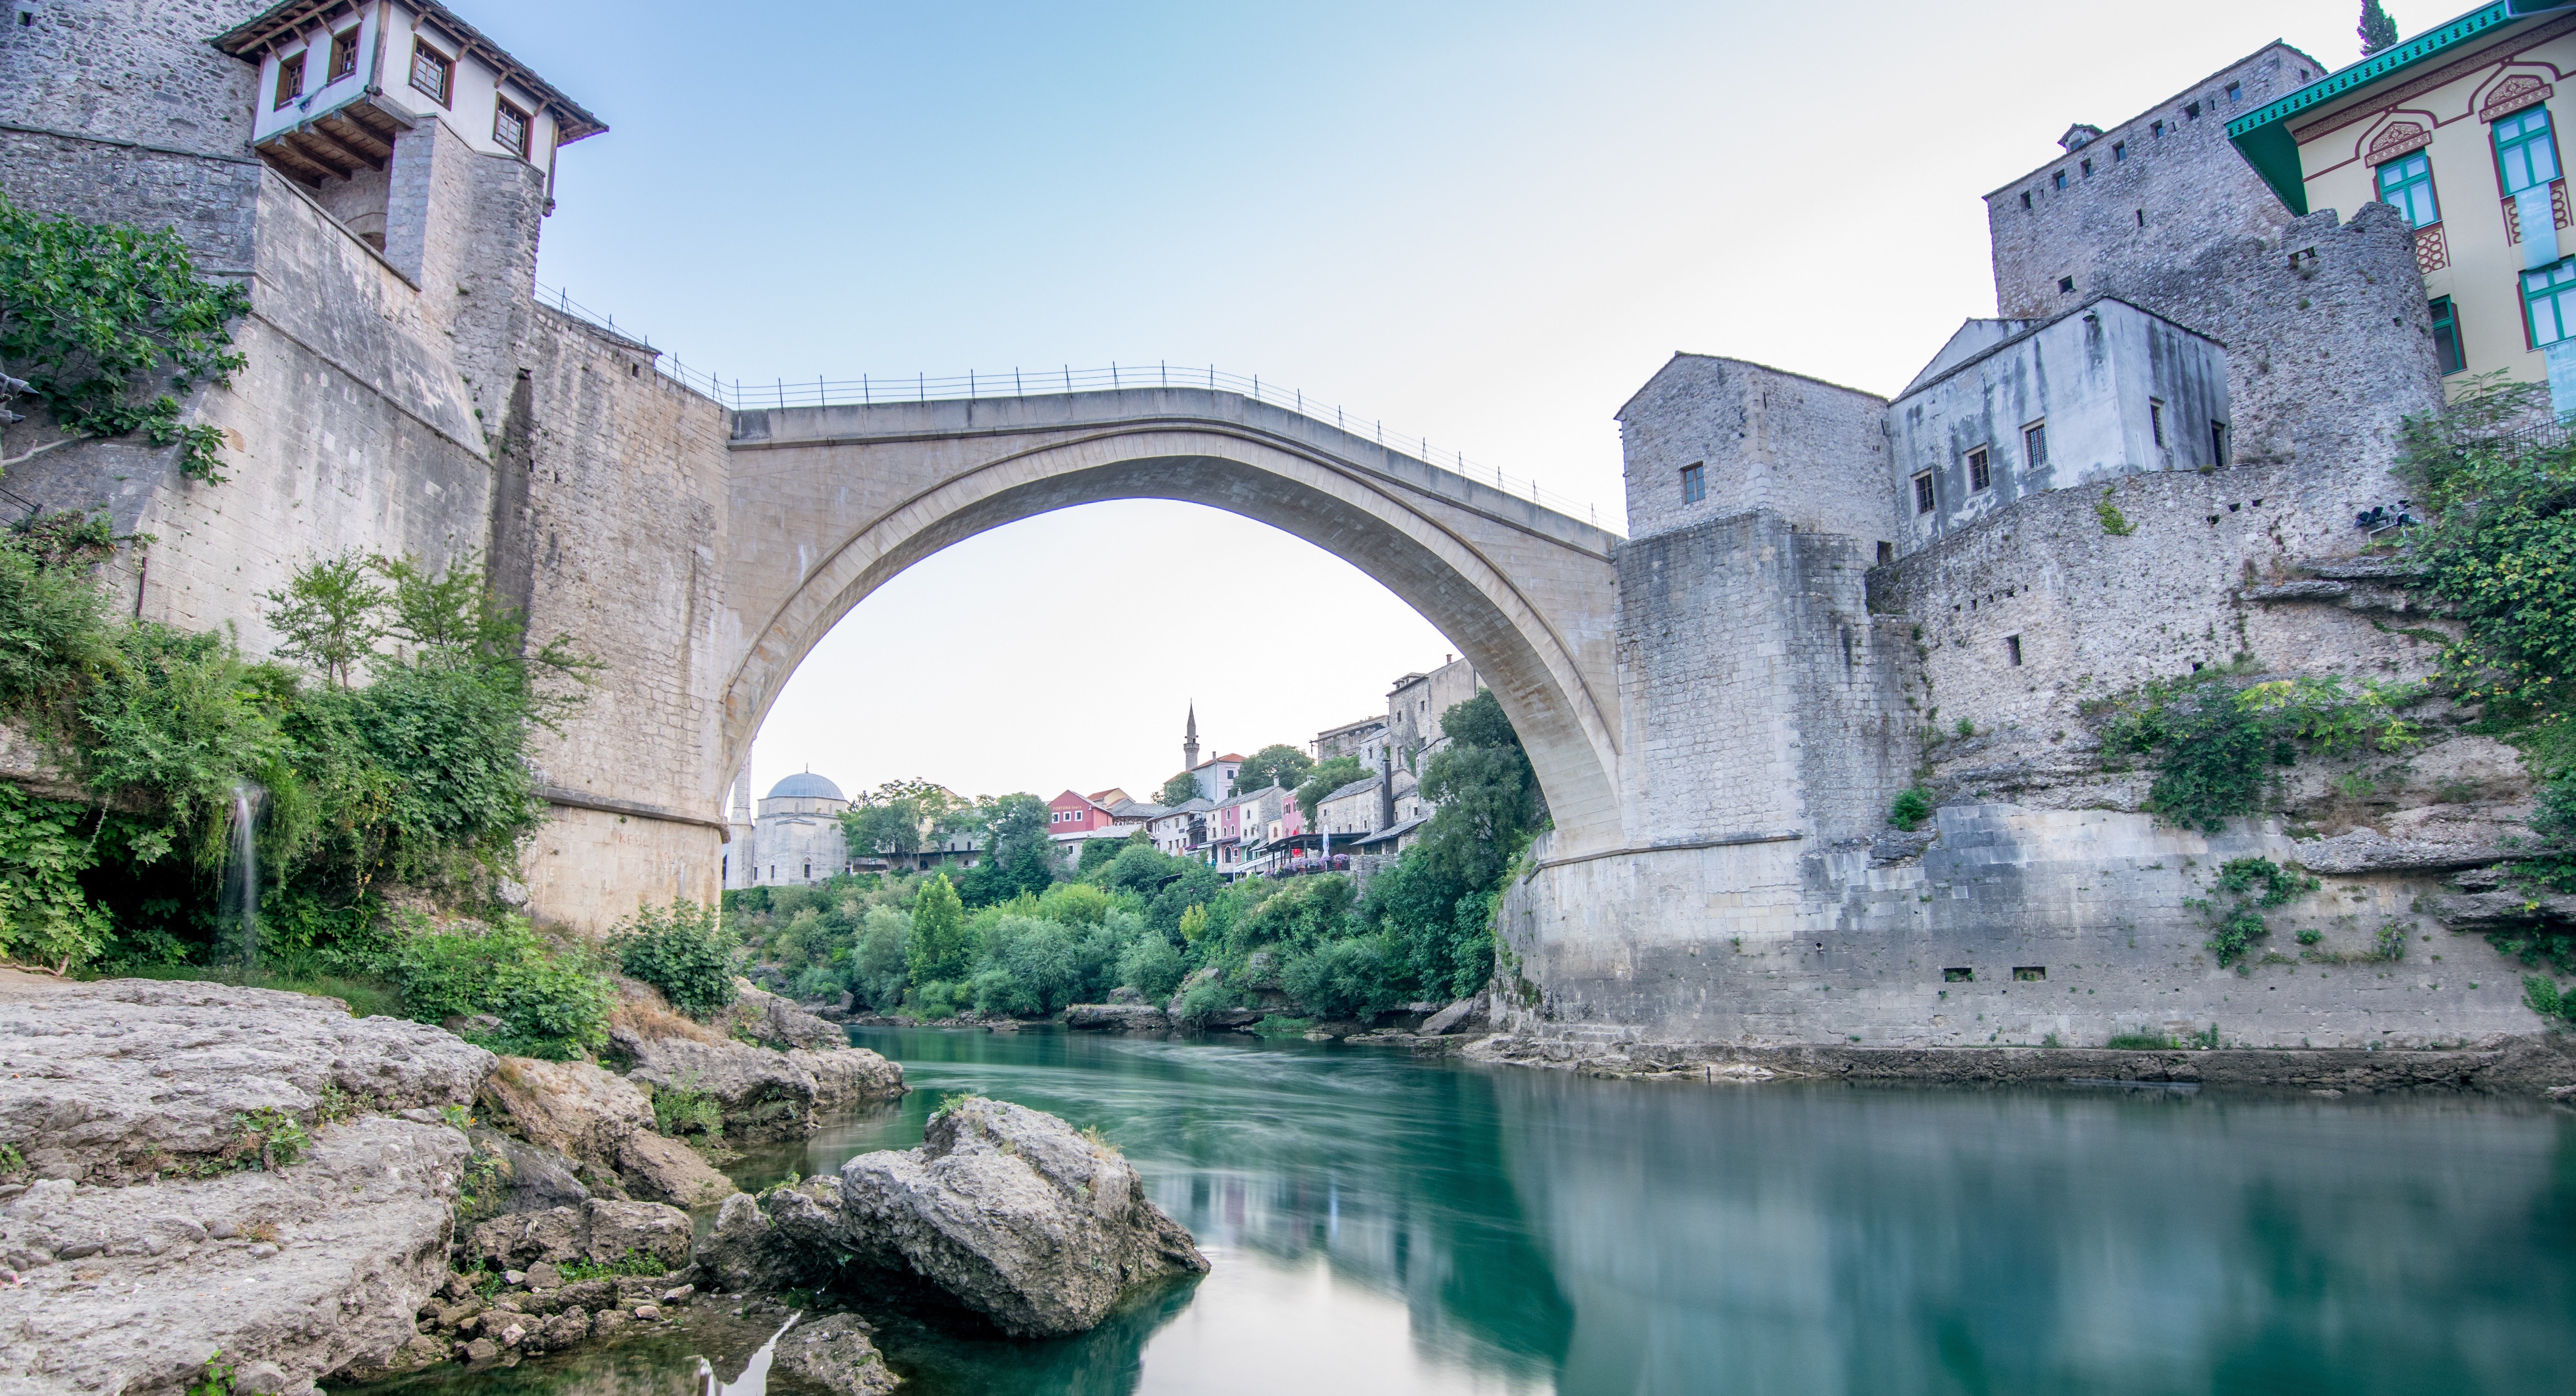 Diary Of A Black Traveler: How Sam Bridged A Cultural Gap In The Balkans